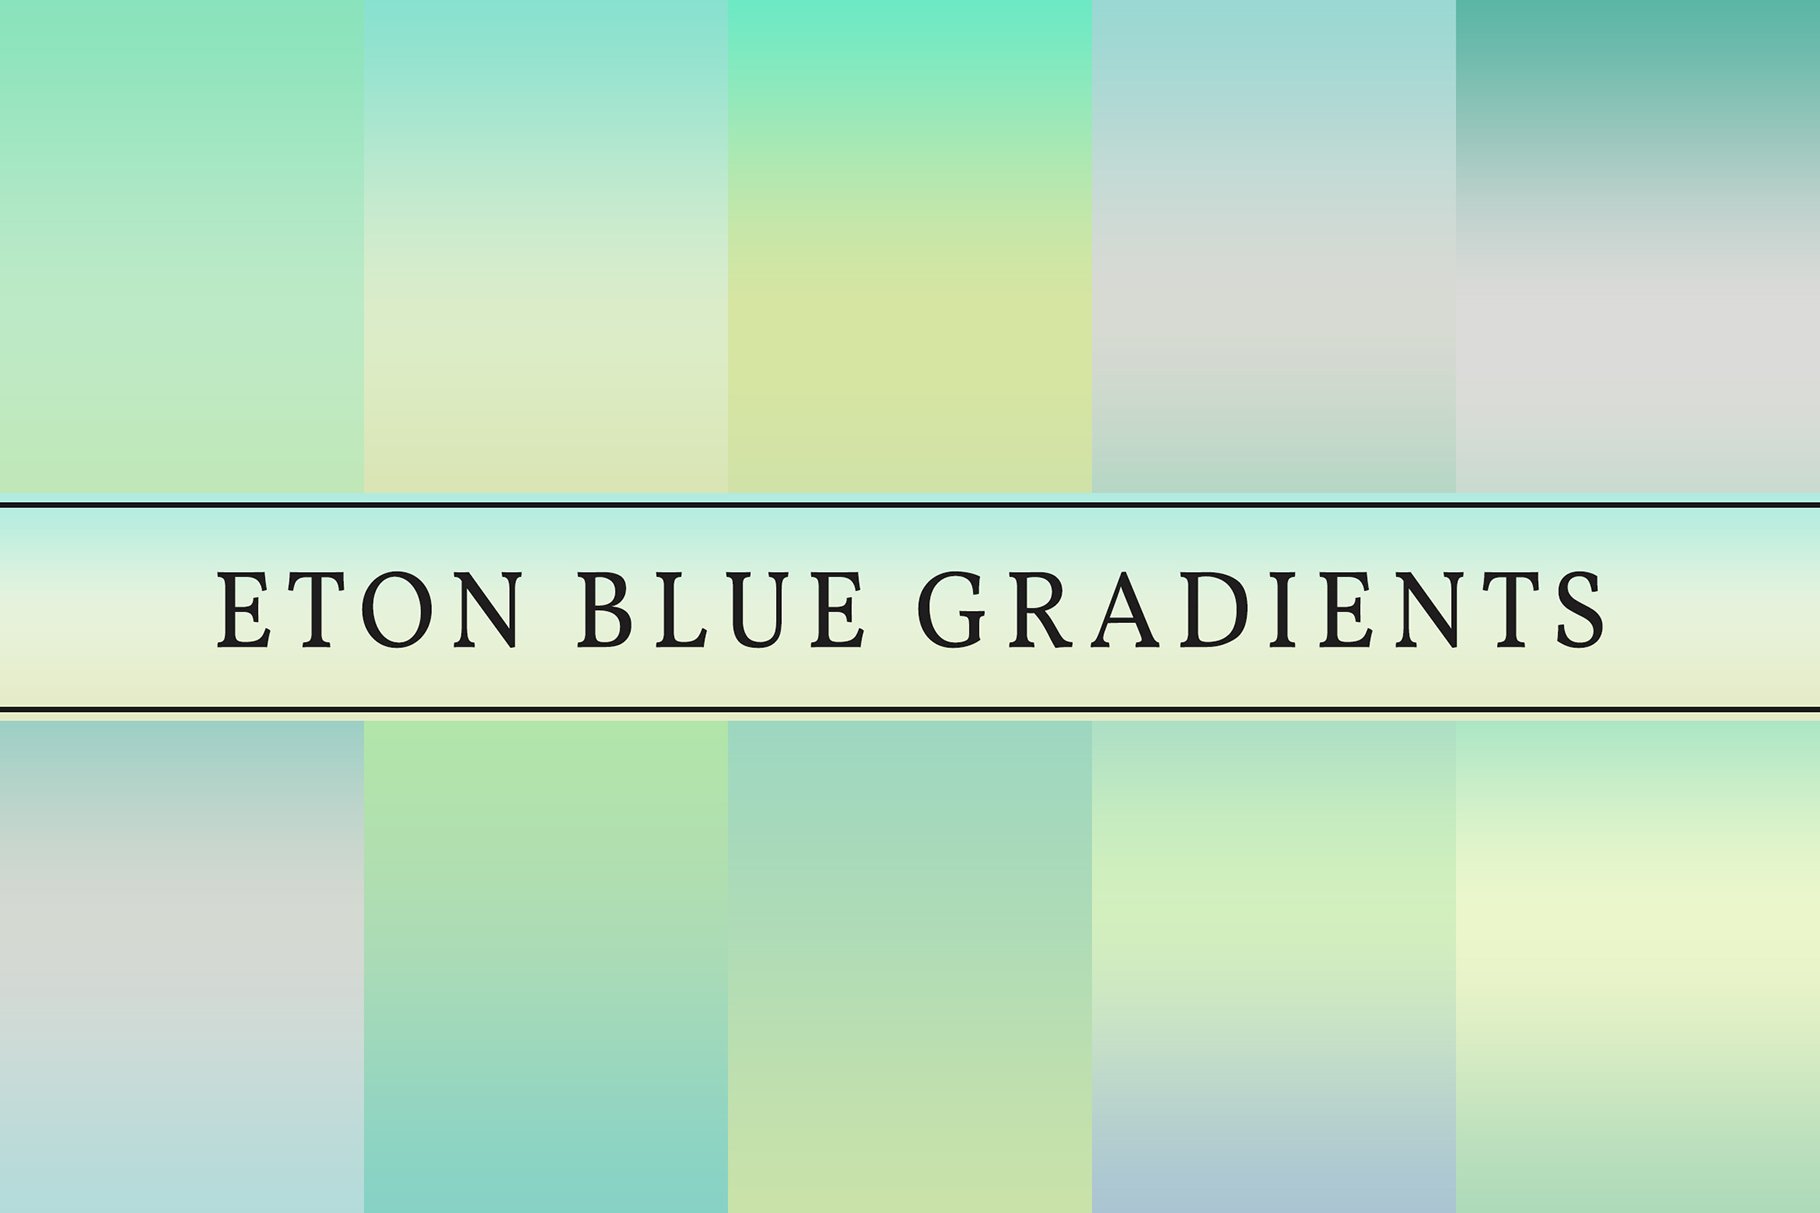 Eton Blue Gradientscover image.